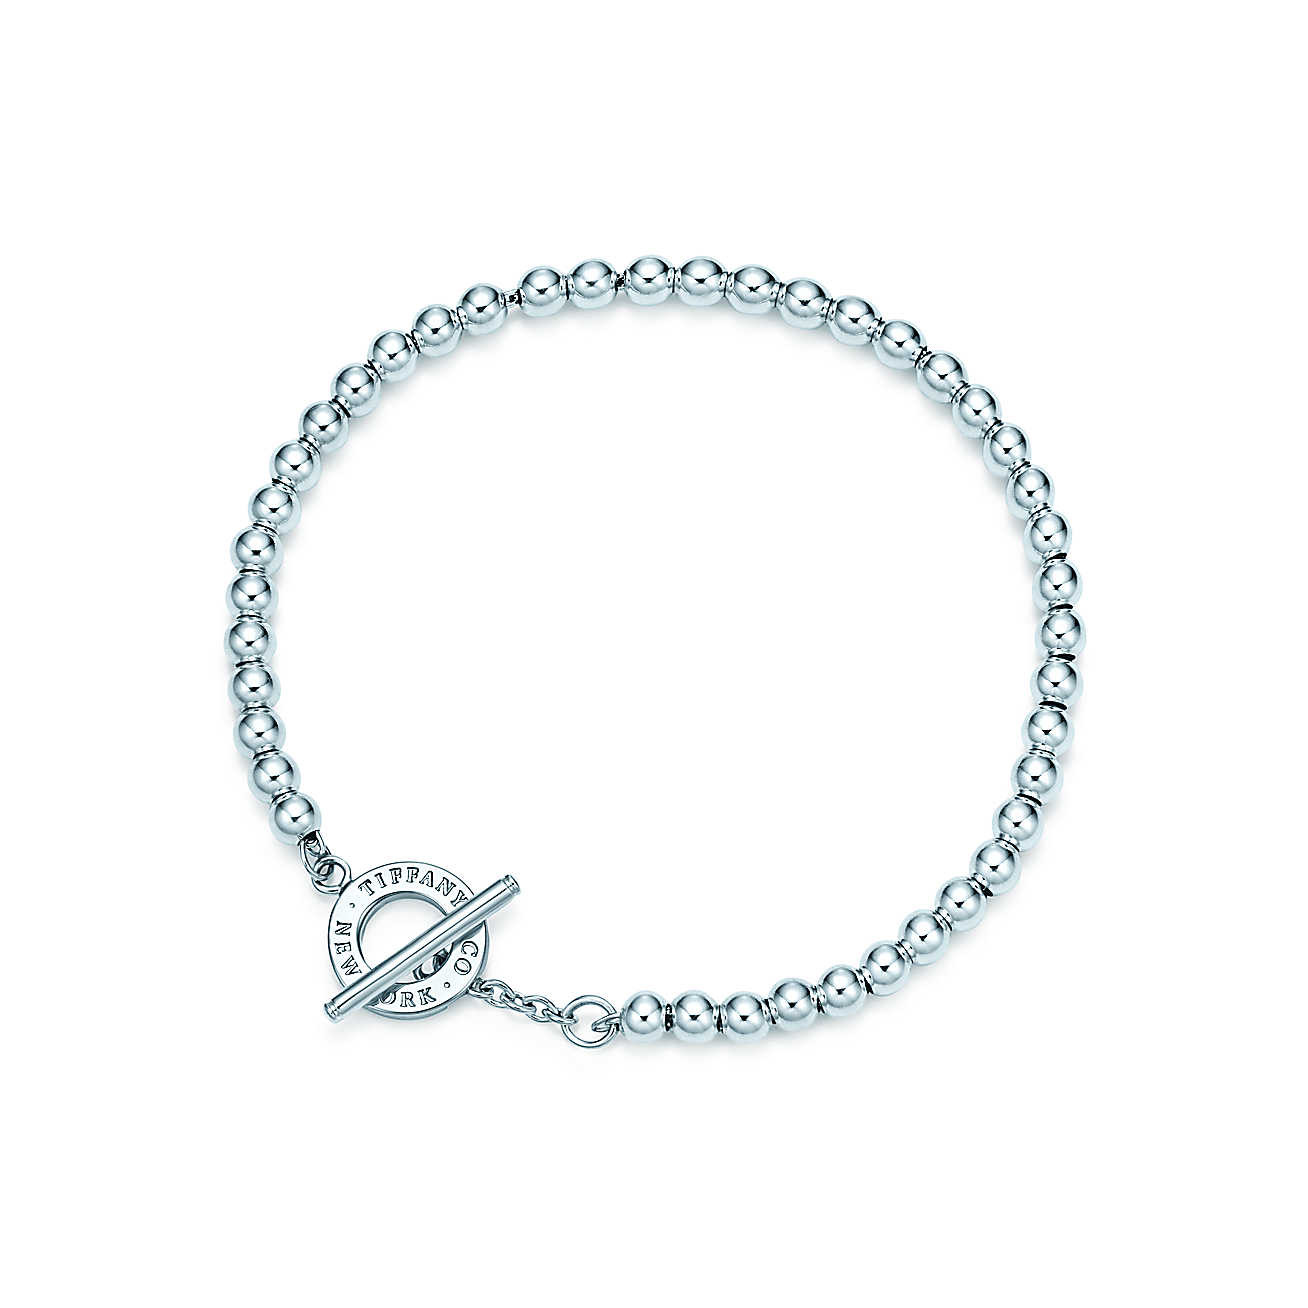 Tiffany Bead Bracelet
 Tiffany Beads toggle bracelet in sterling silver medium